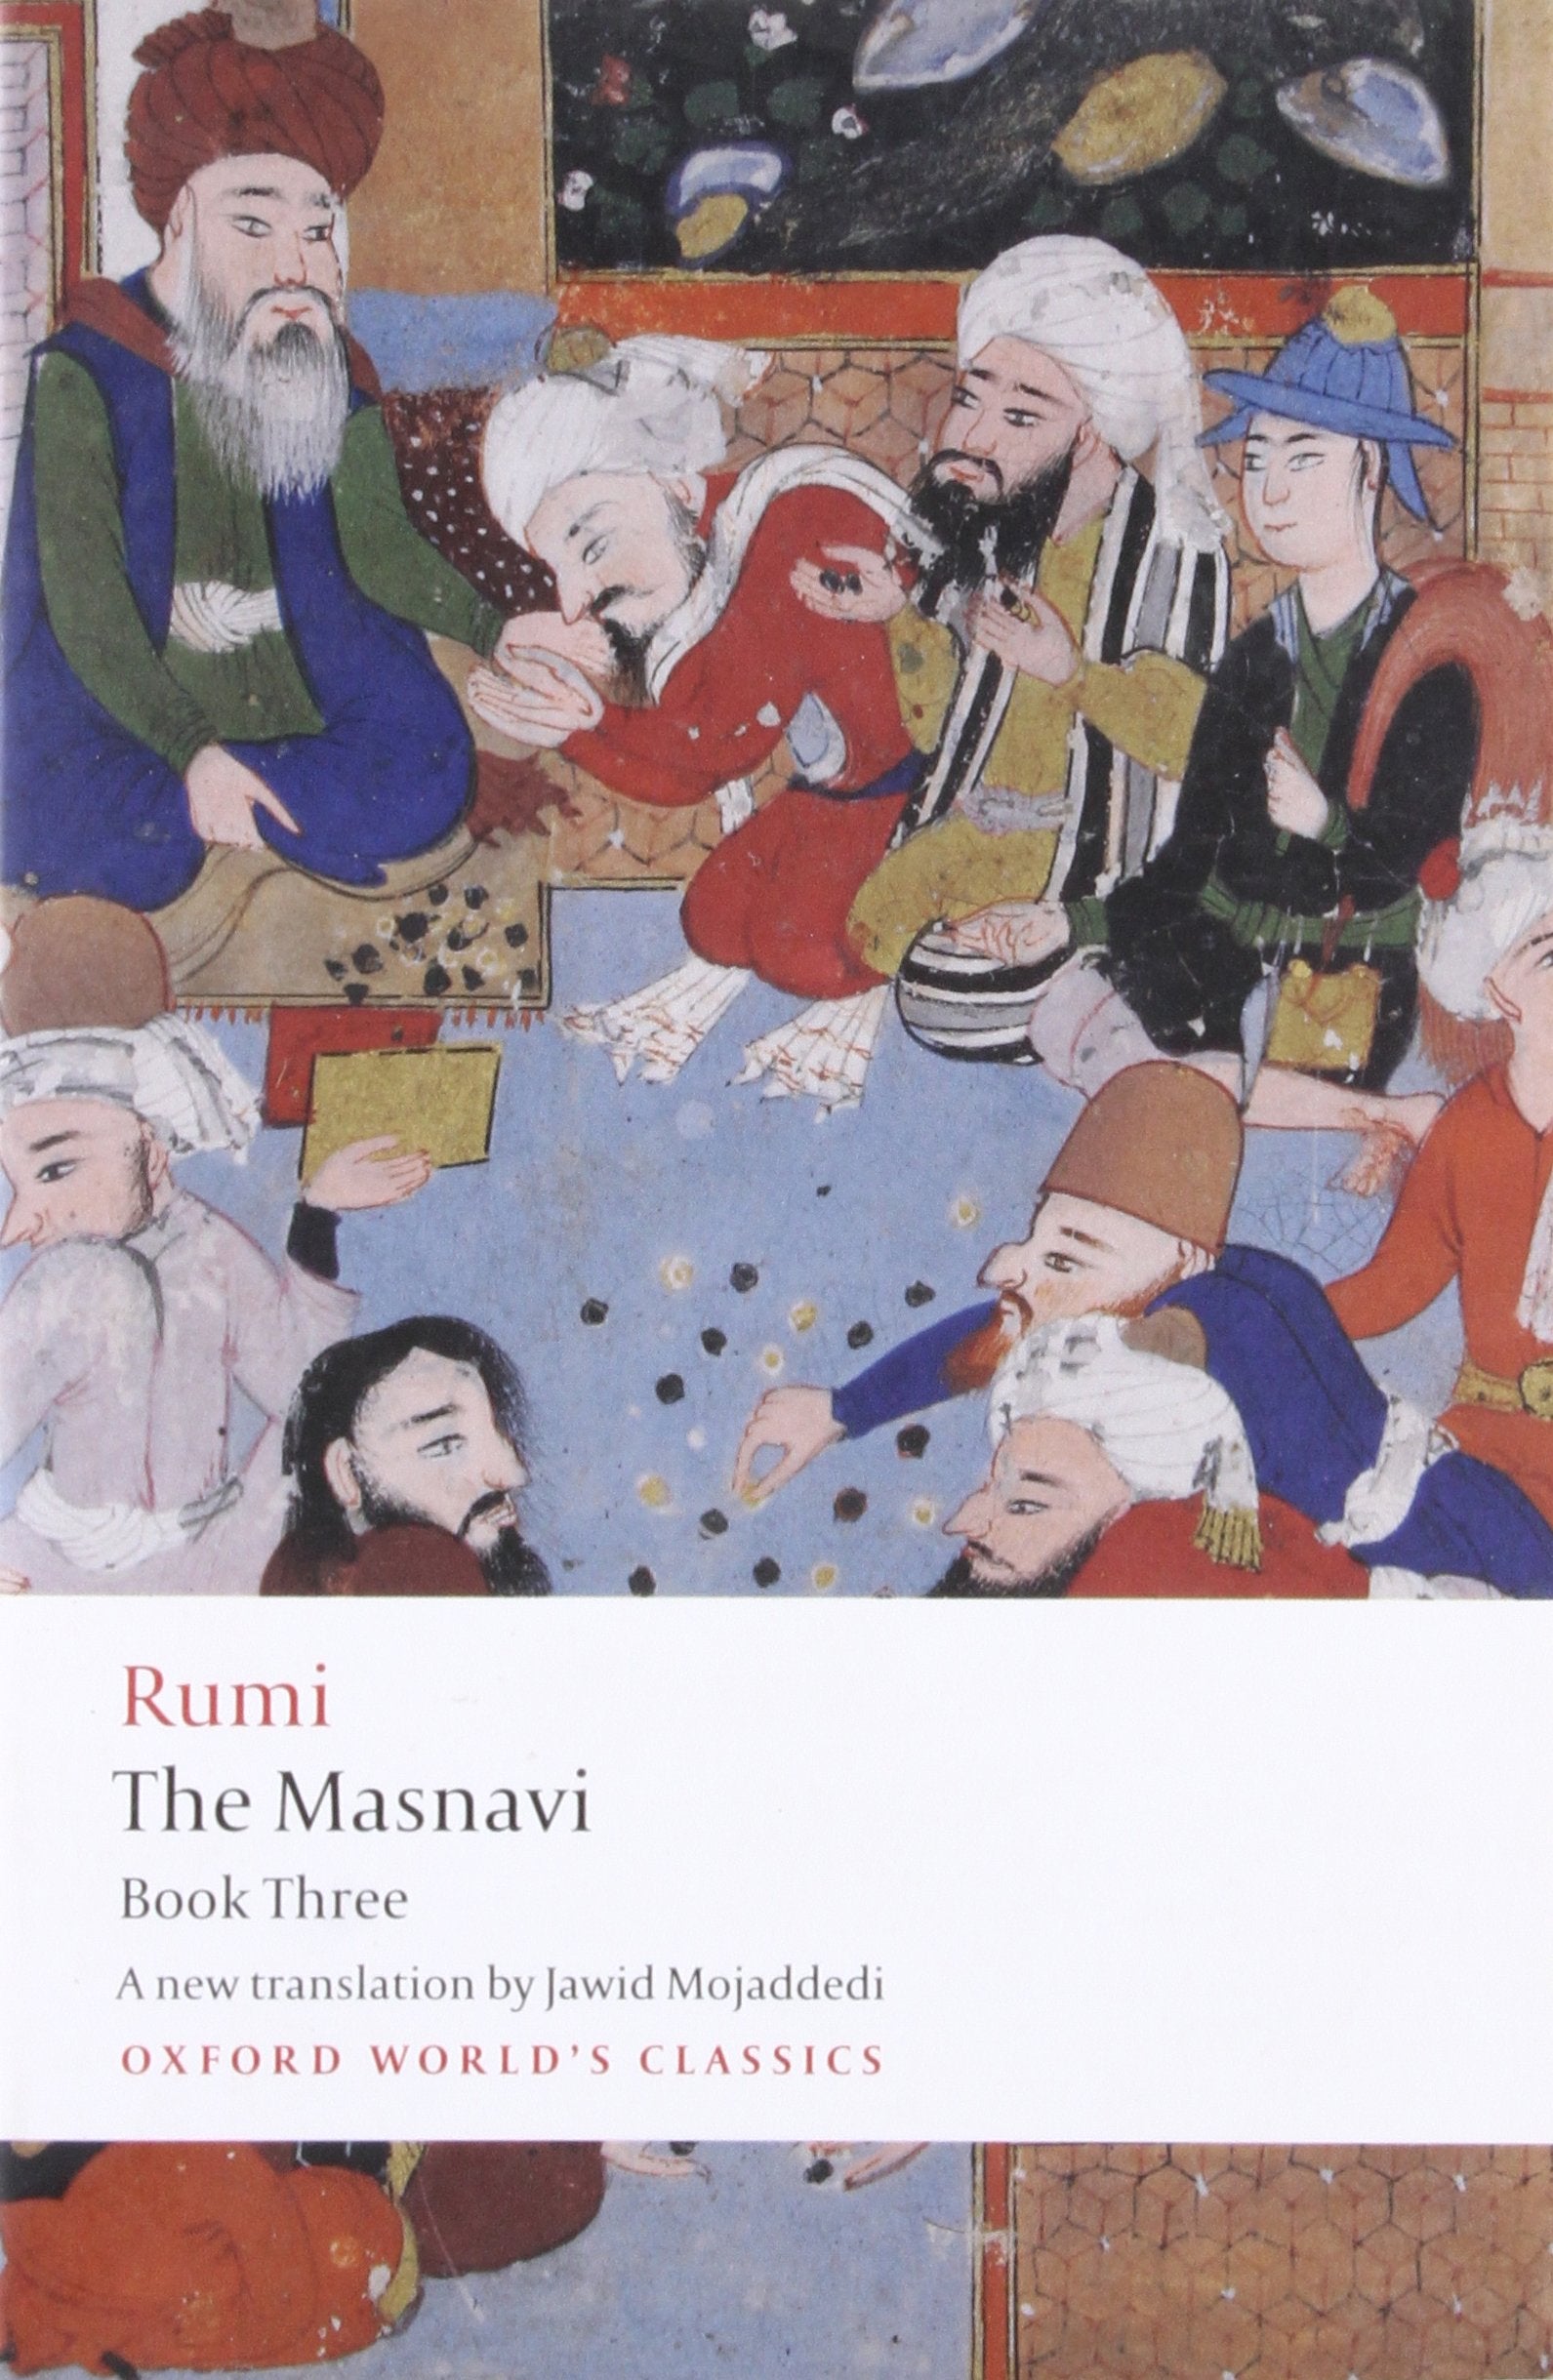 Rumi: The Masnavi, Book Three